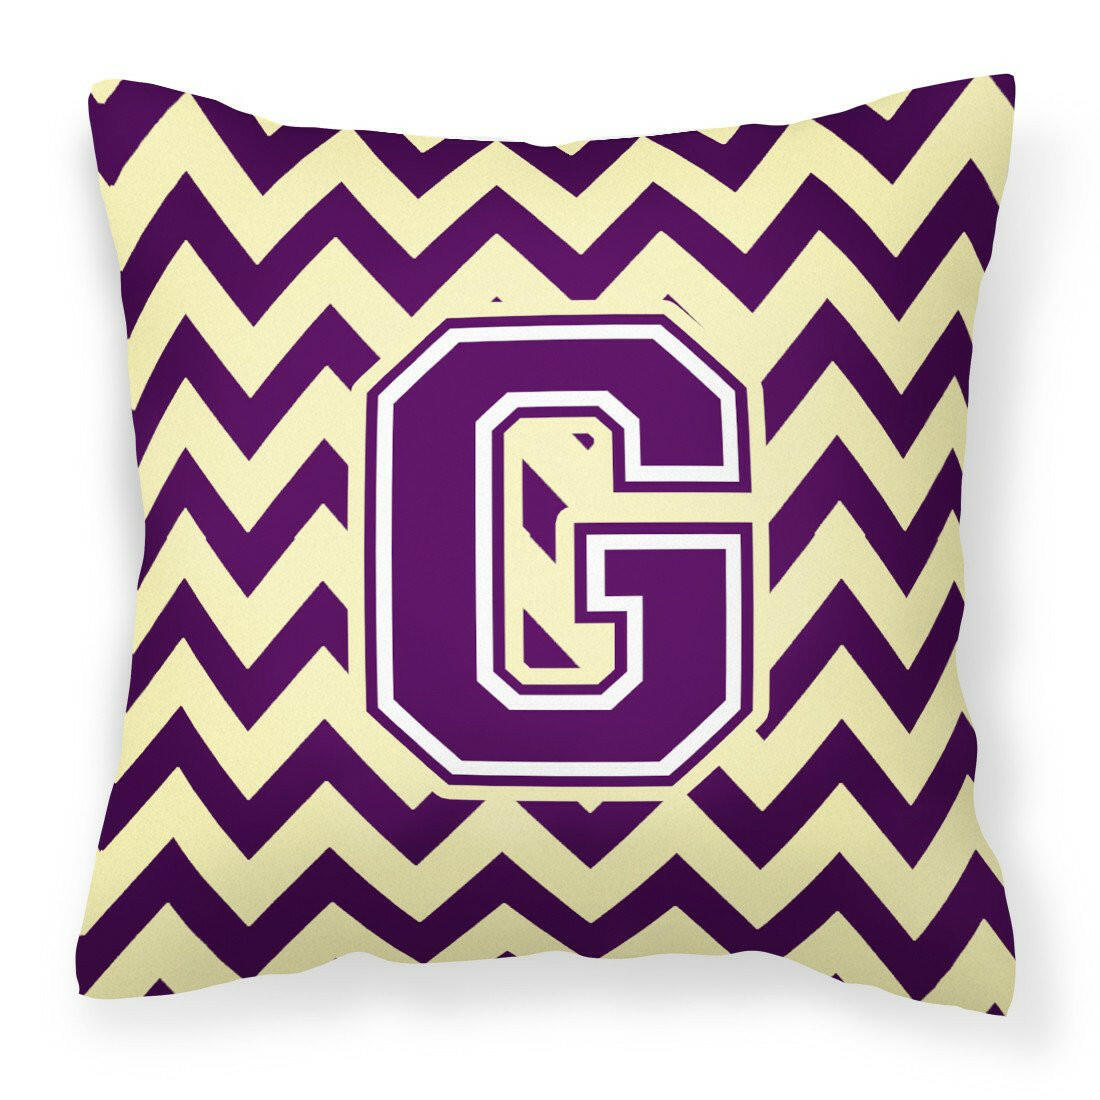 Letter G Chevron Purple and Gold Fabric Decorative Pillow CJ1058-GPW1414 by Caroline's Treasures